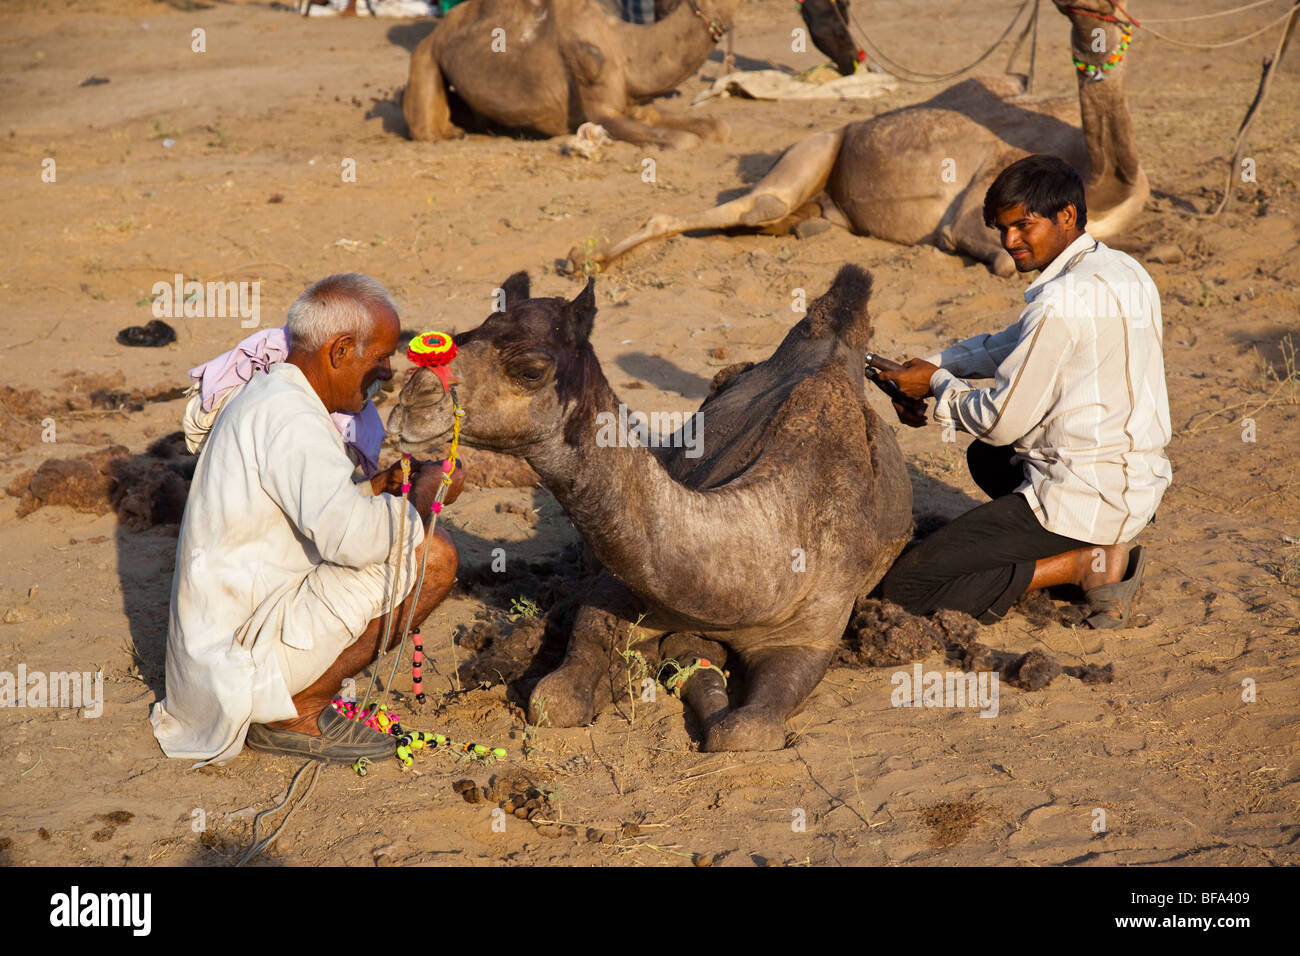 Shearing a camel at the Camel Fair in Pushkar India Stock Photo